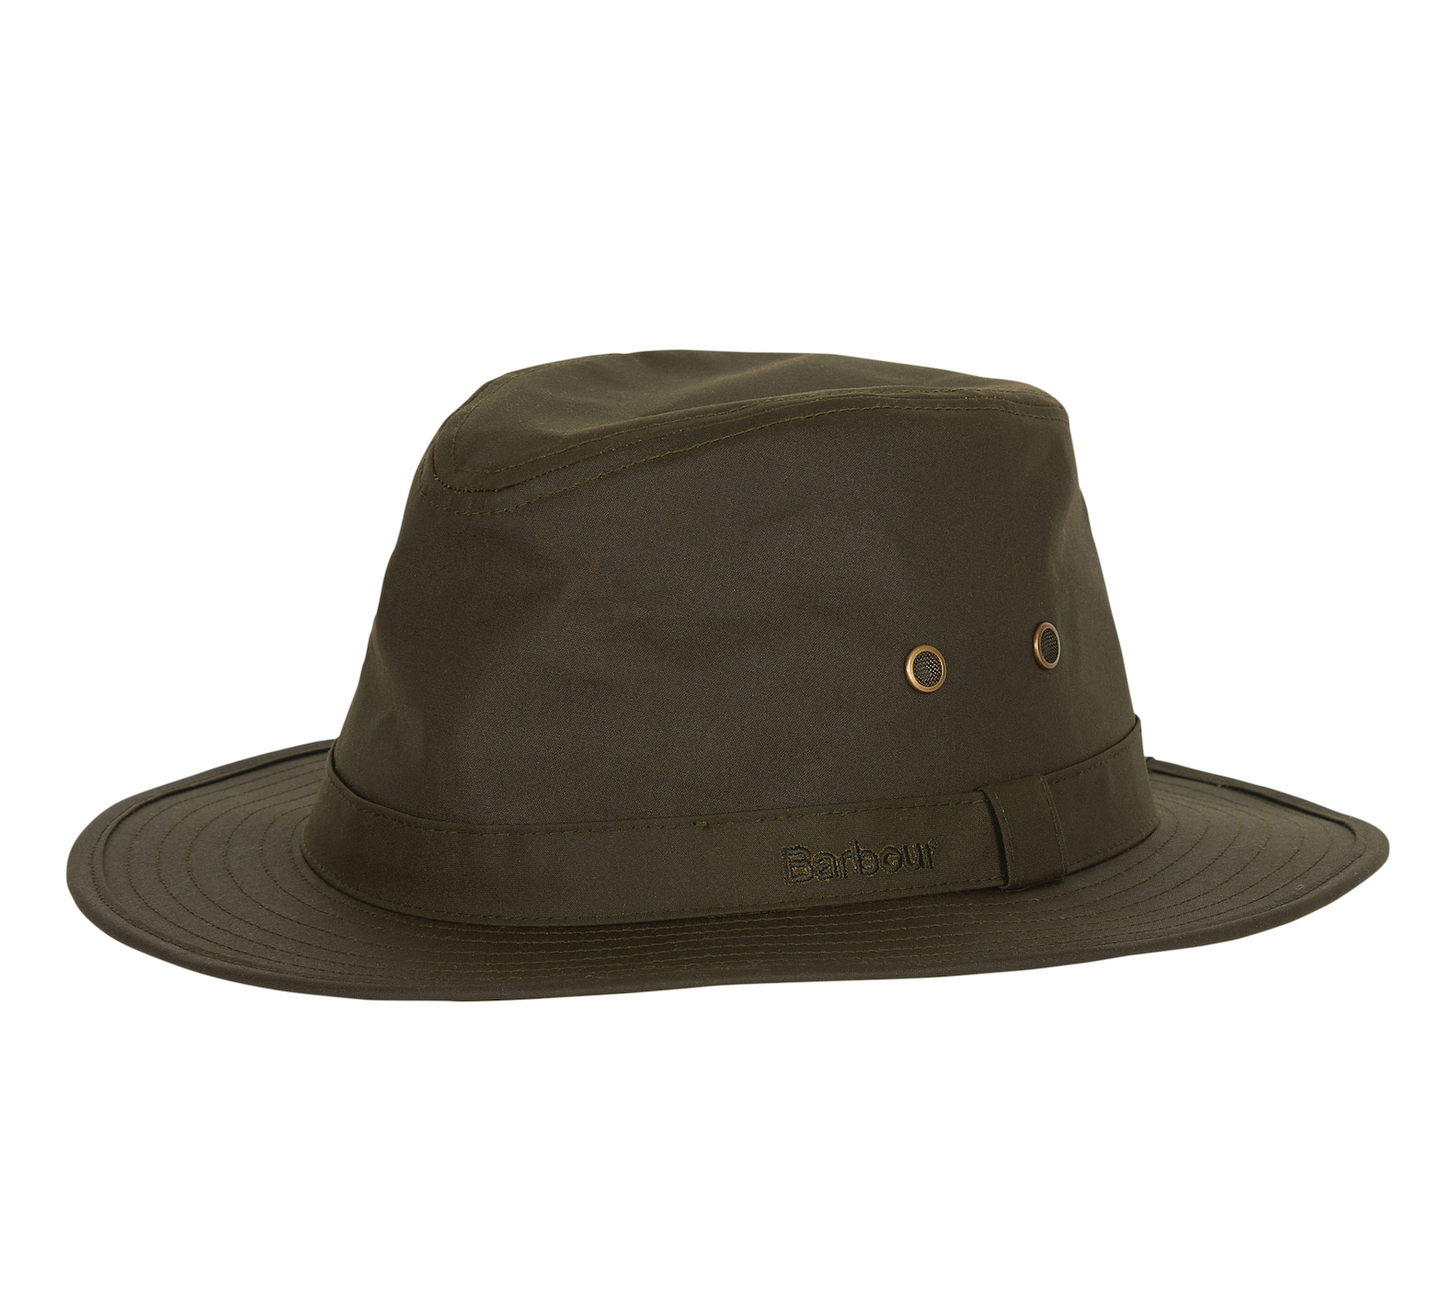 Barbour Safari Wax Hat in Olive MHA0733 OL51